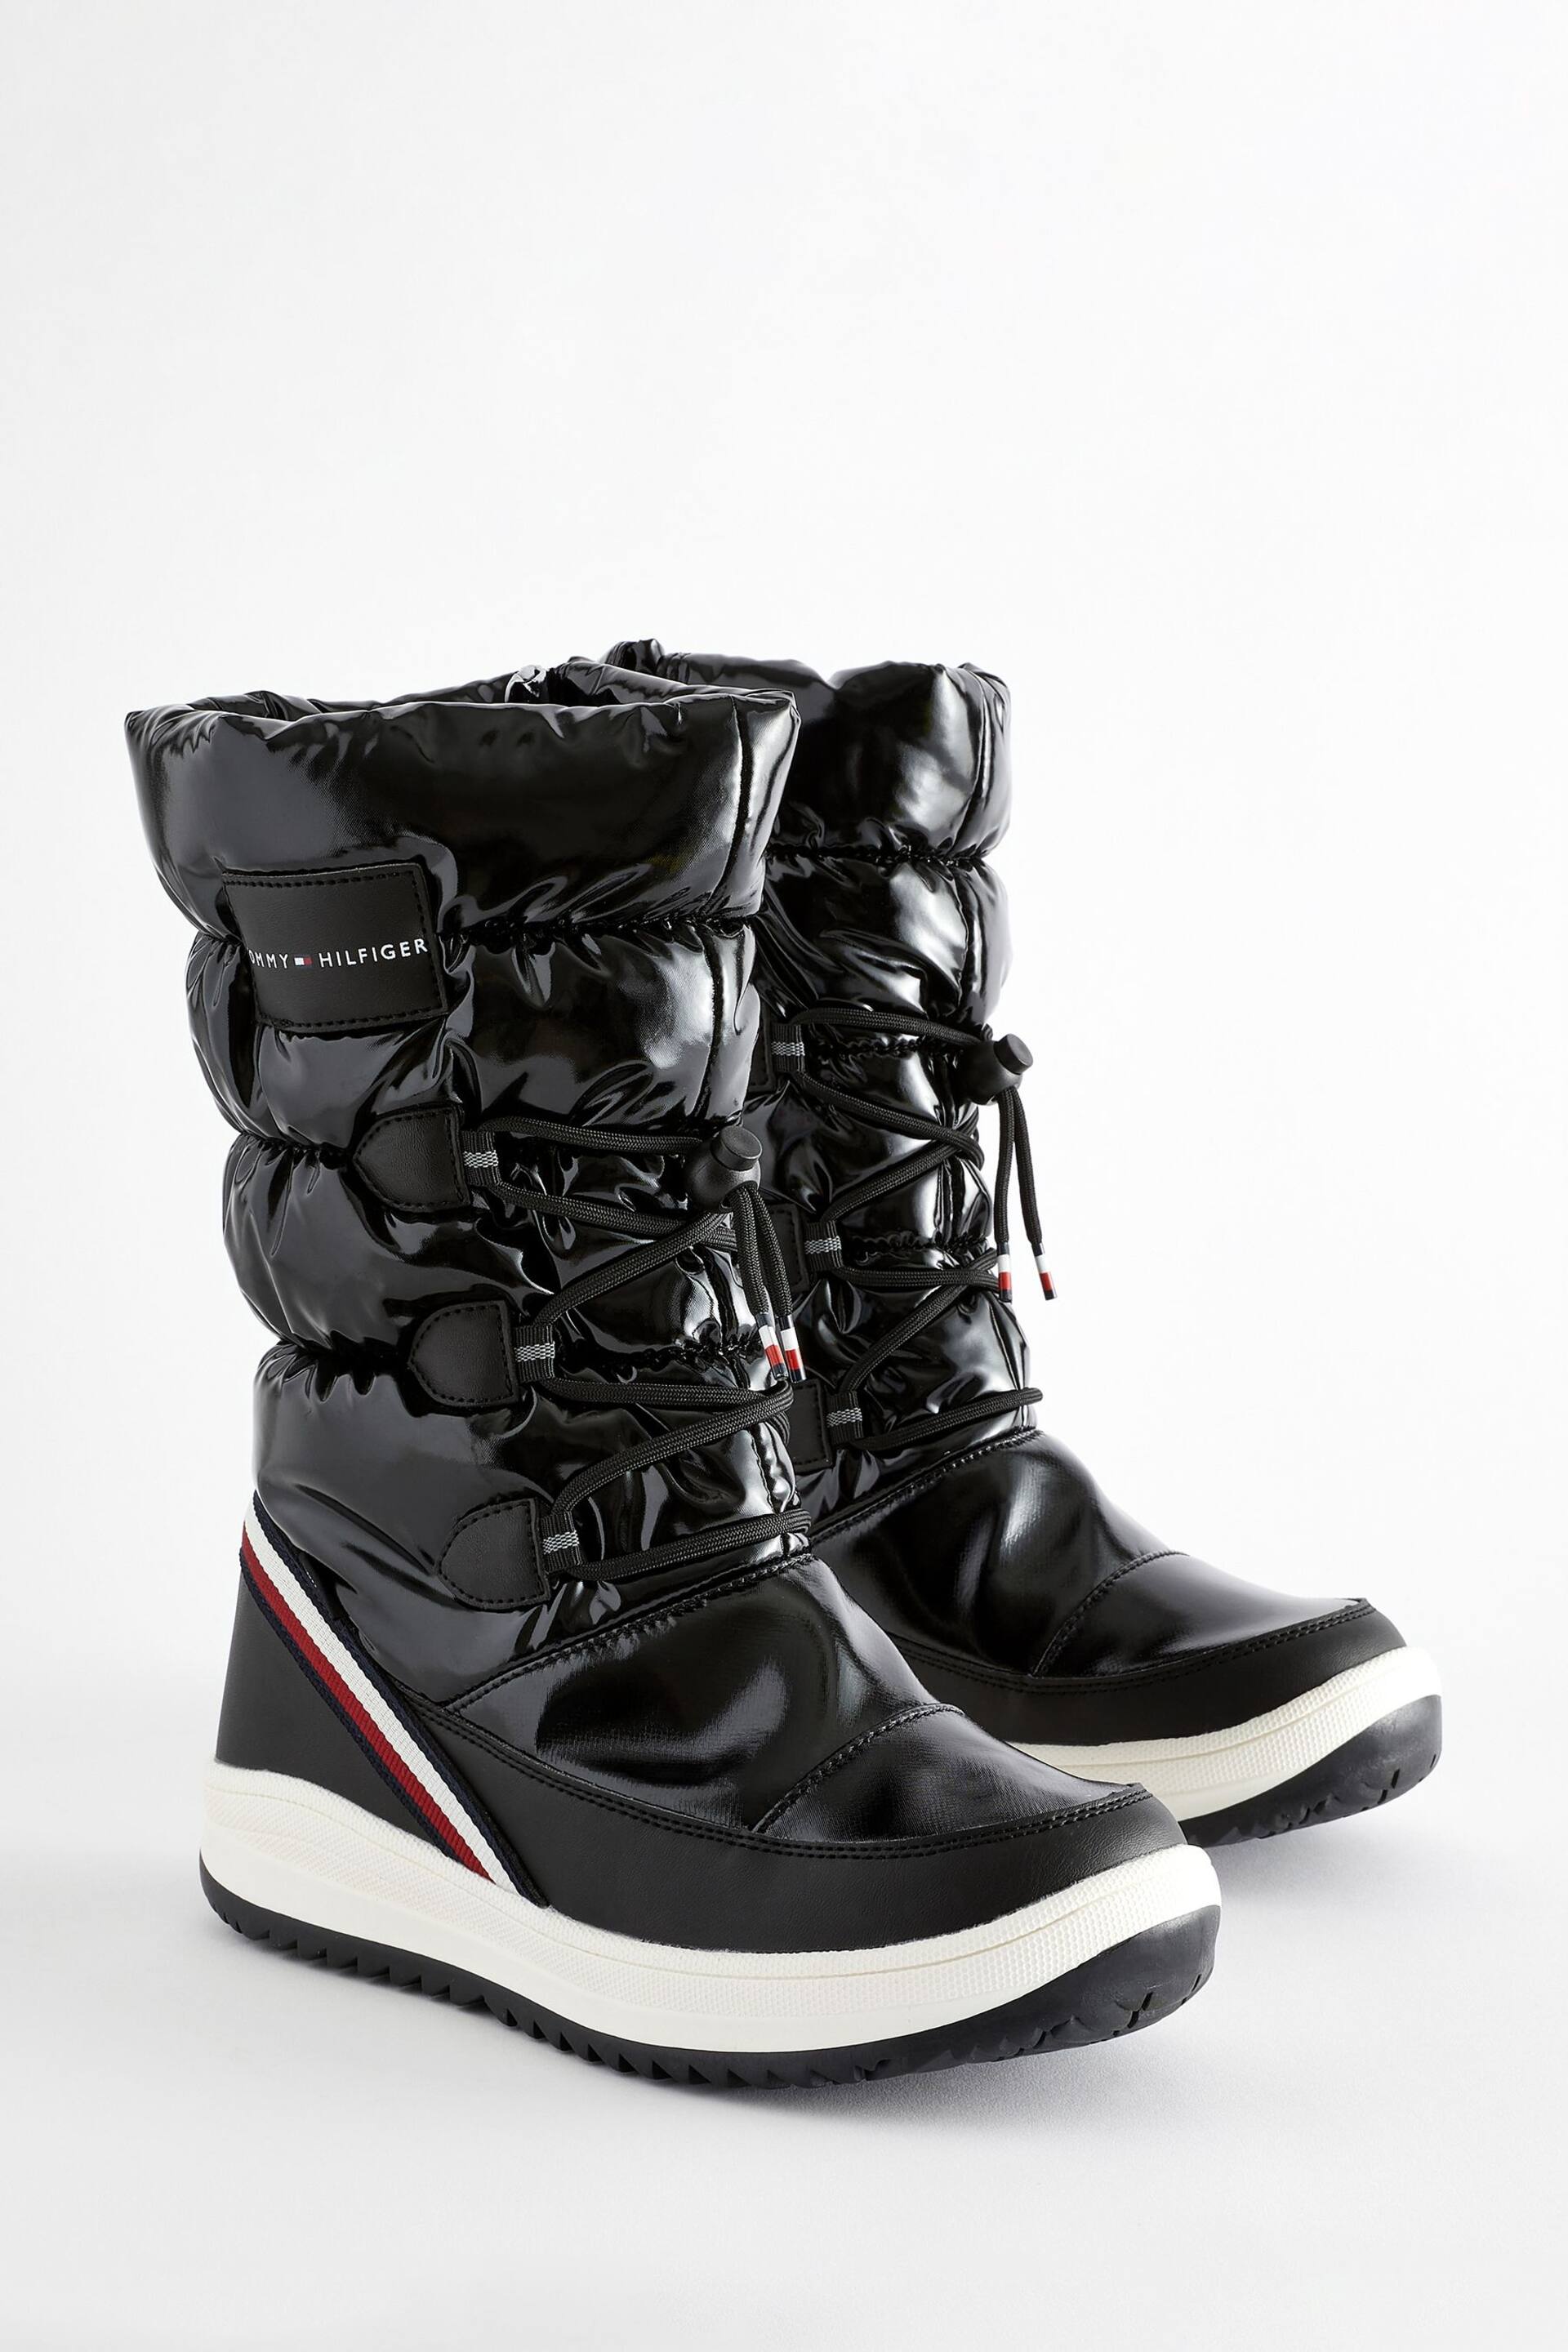 Tommy Hilfiger Kids Black Snow Boots - Image 2 of 4